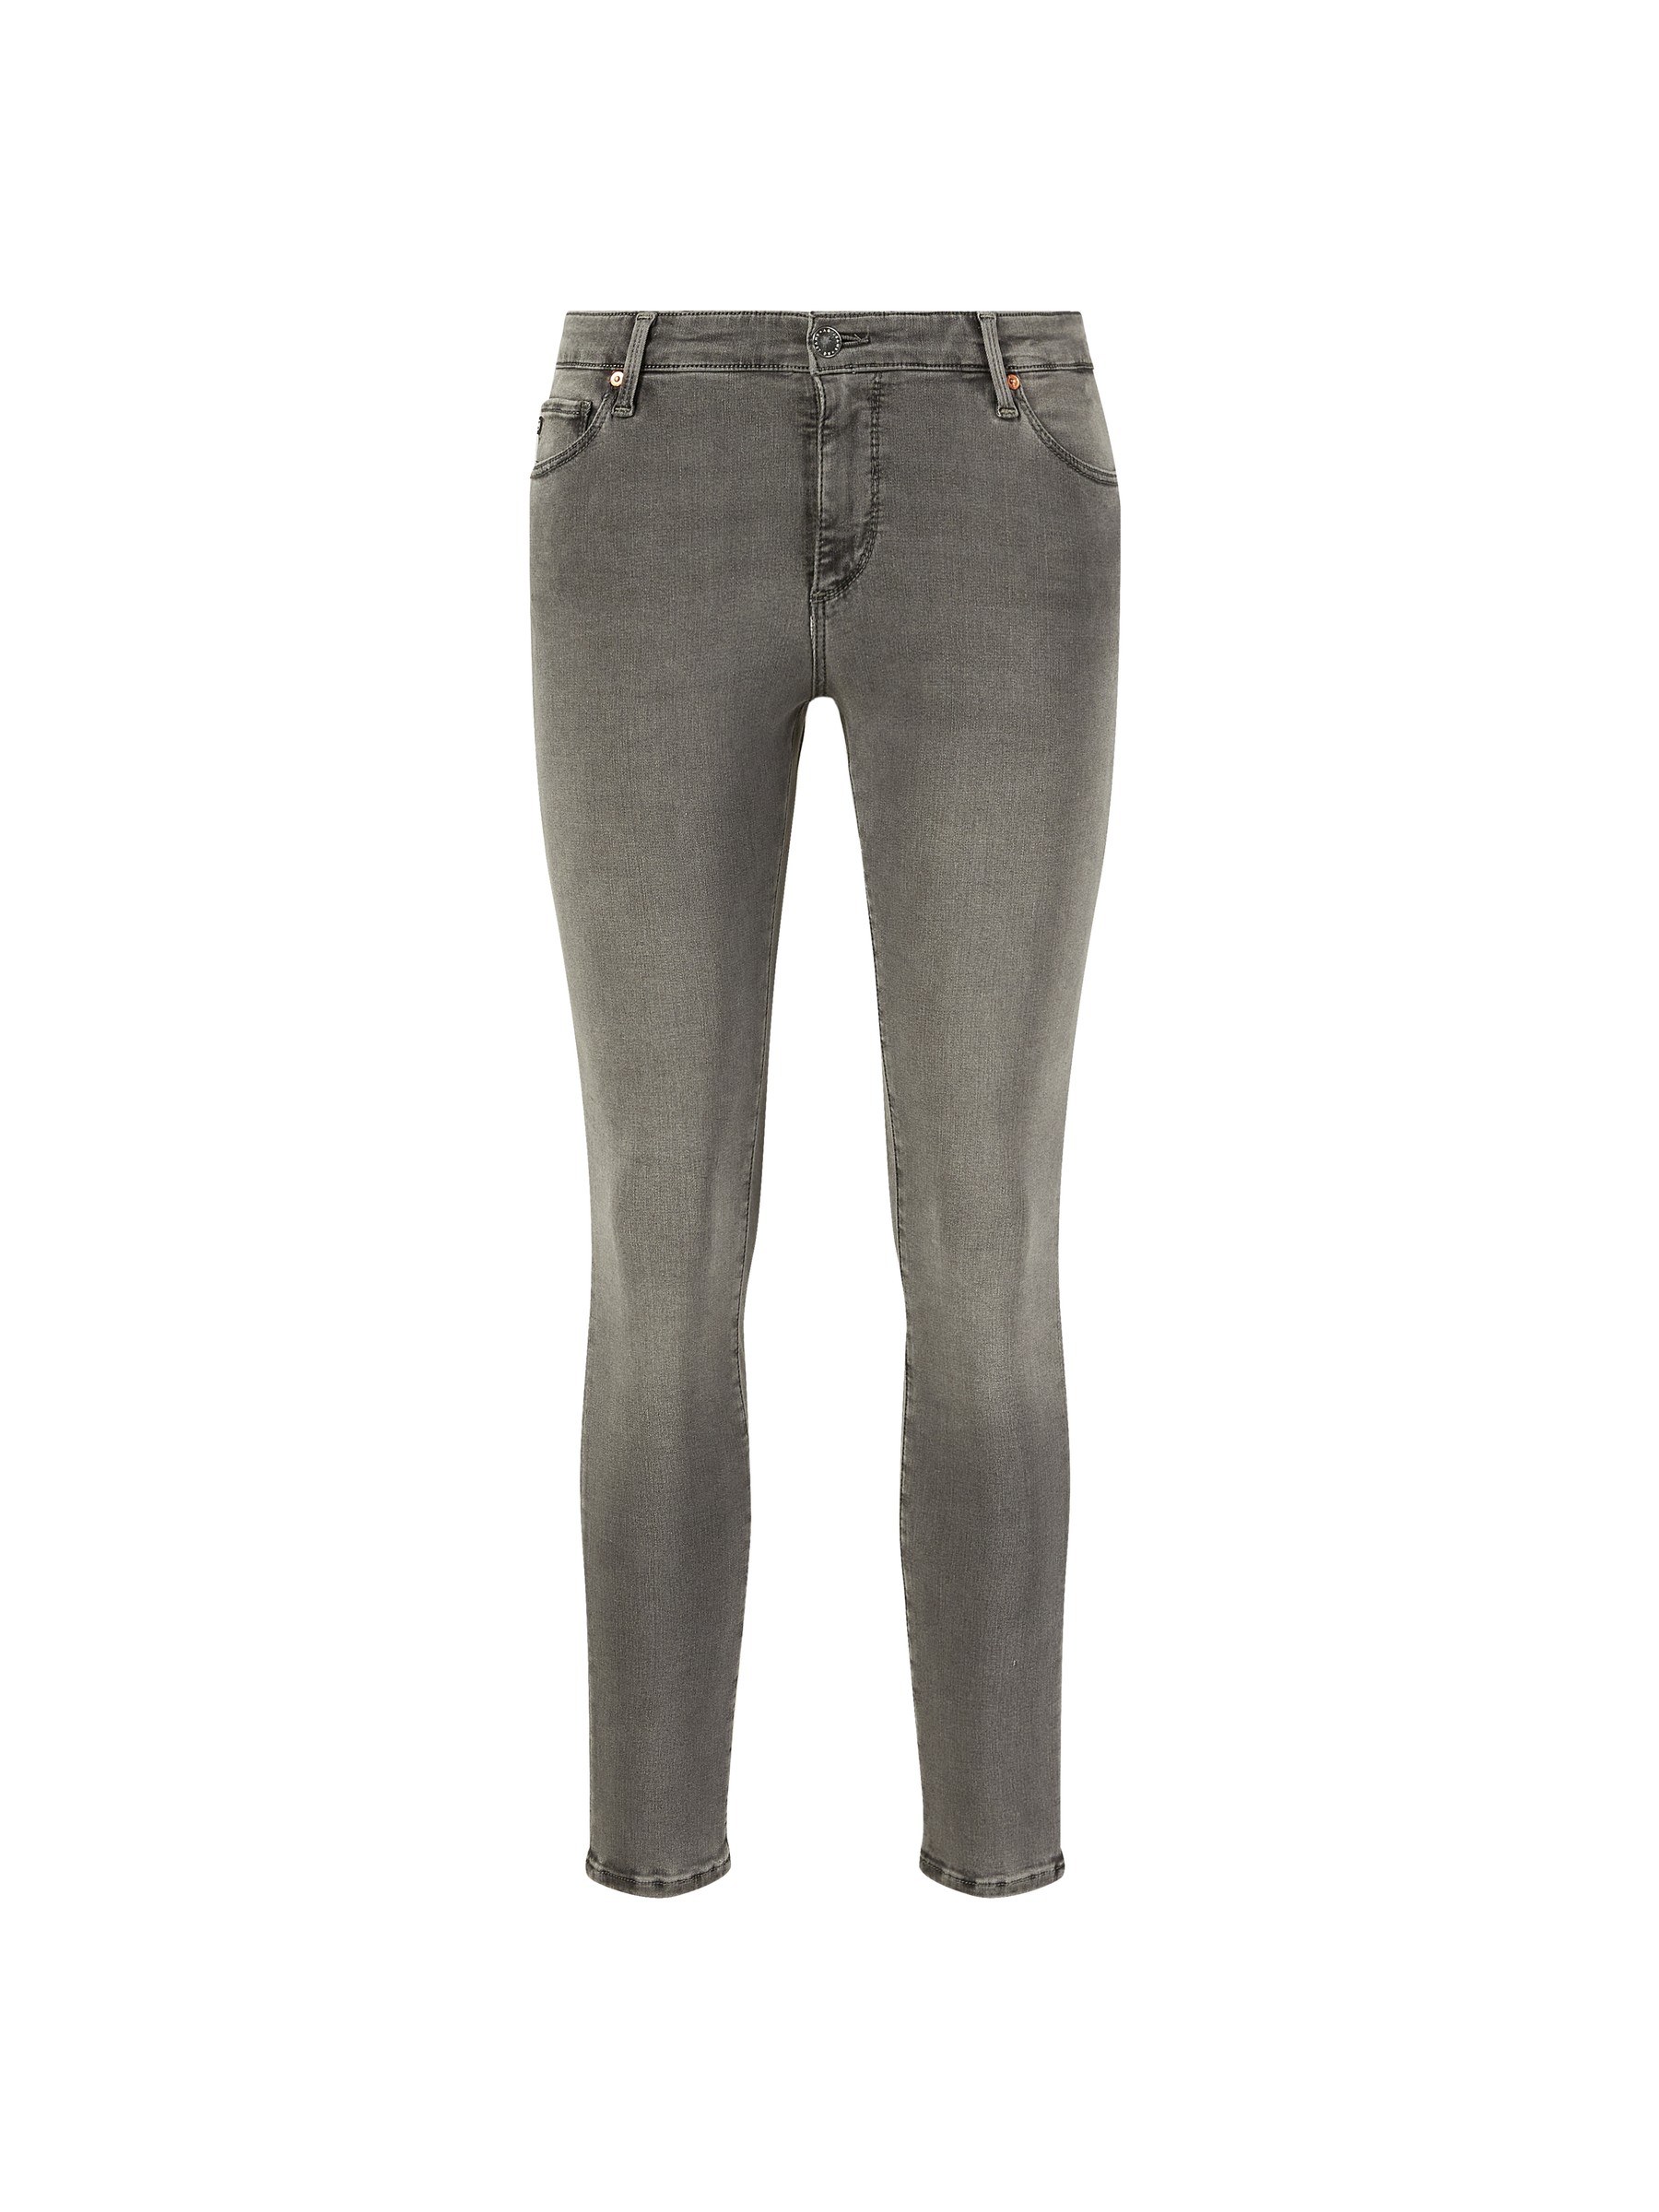 Damen Bekleidung Jeans Röhrenjeans AG Jeans Denim Skinny-Fit Jeans Leggins Ankle Grau in Grau 